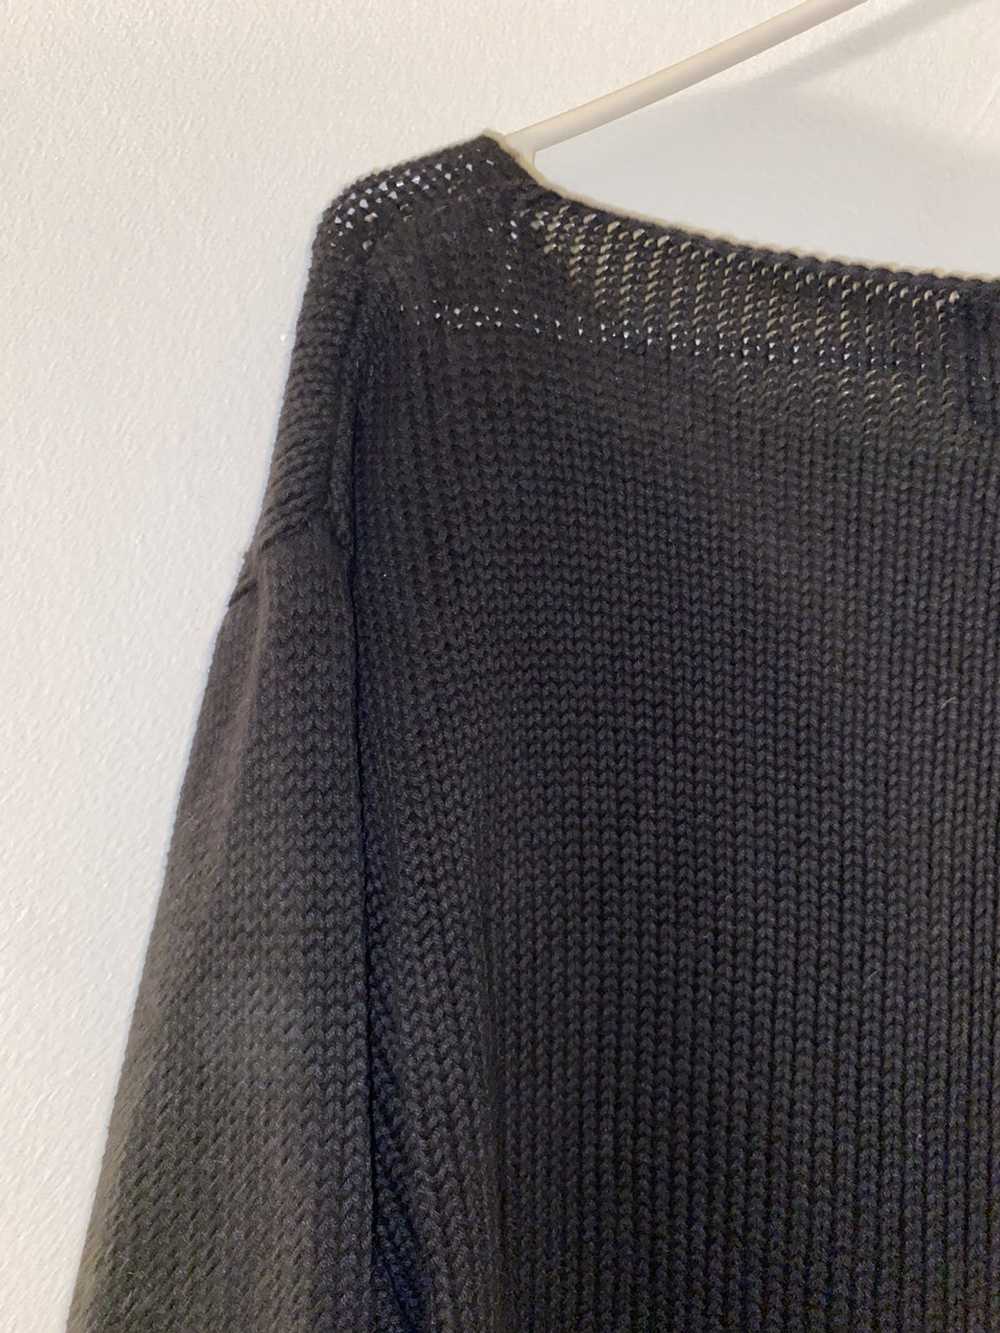 The People Vs Black Knitwear Sweater - image 7